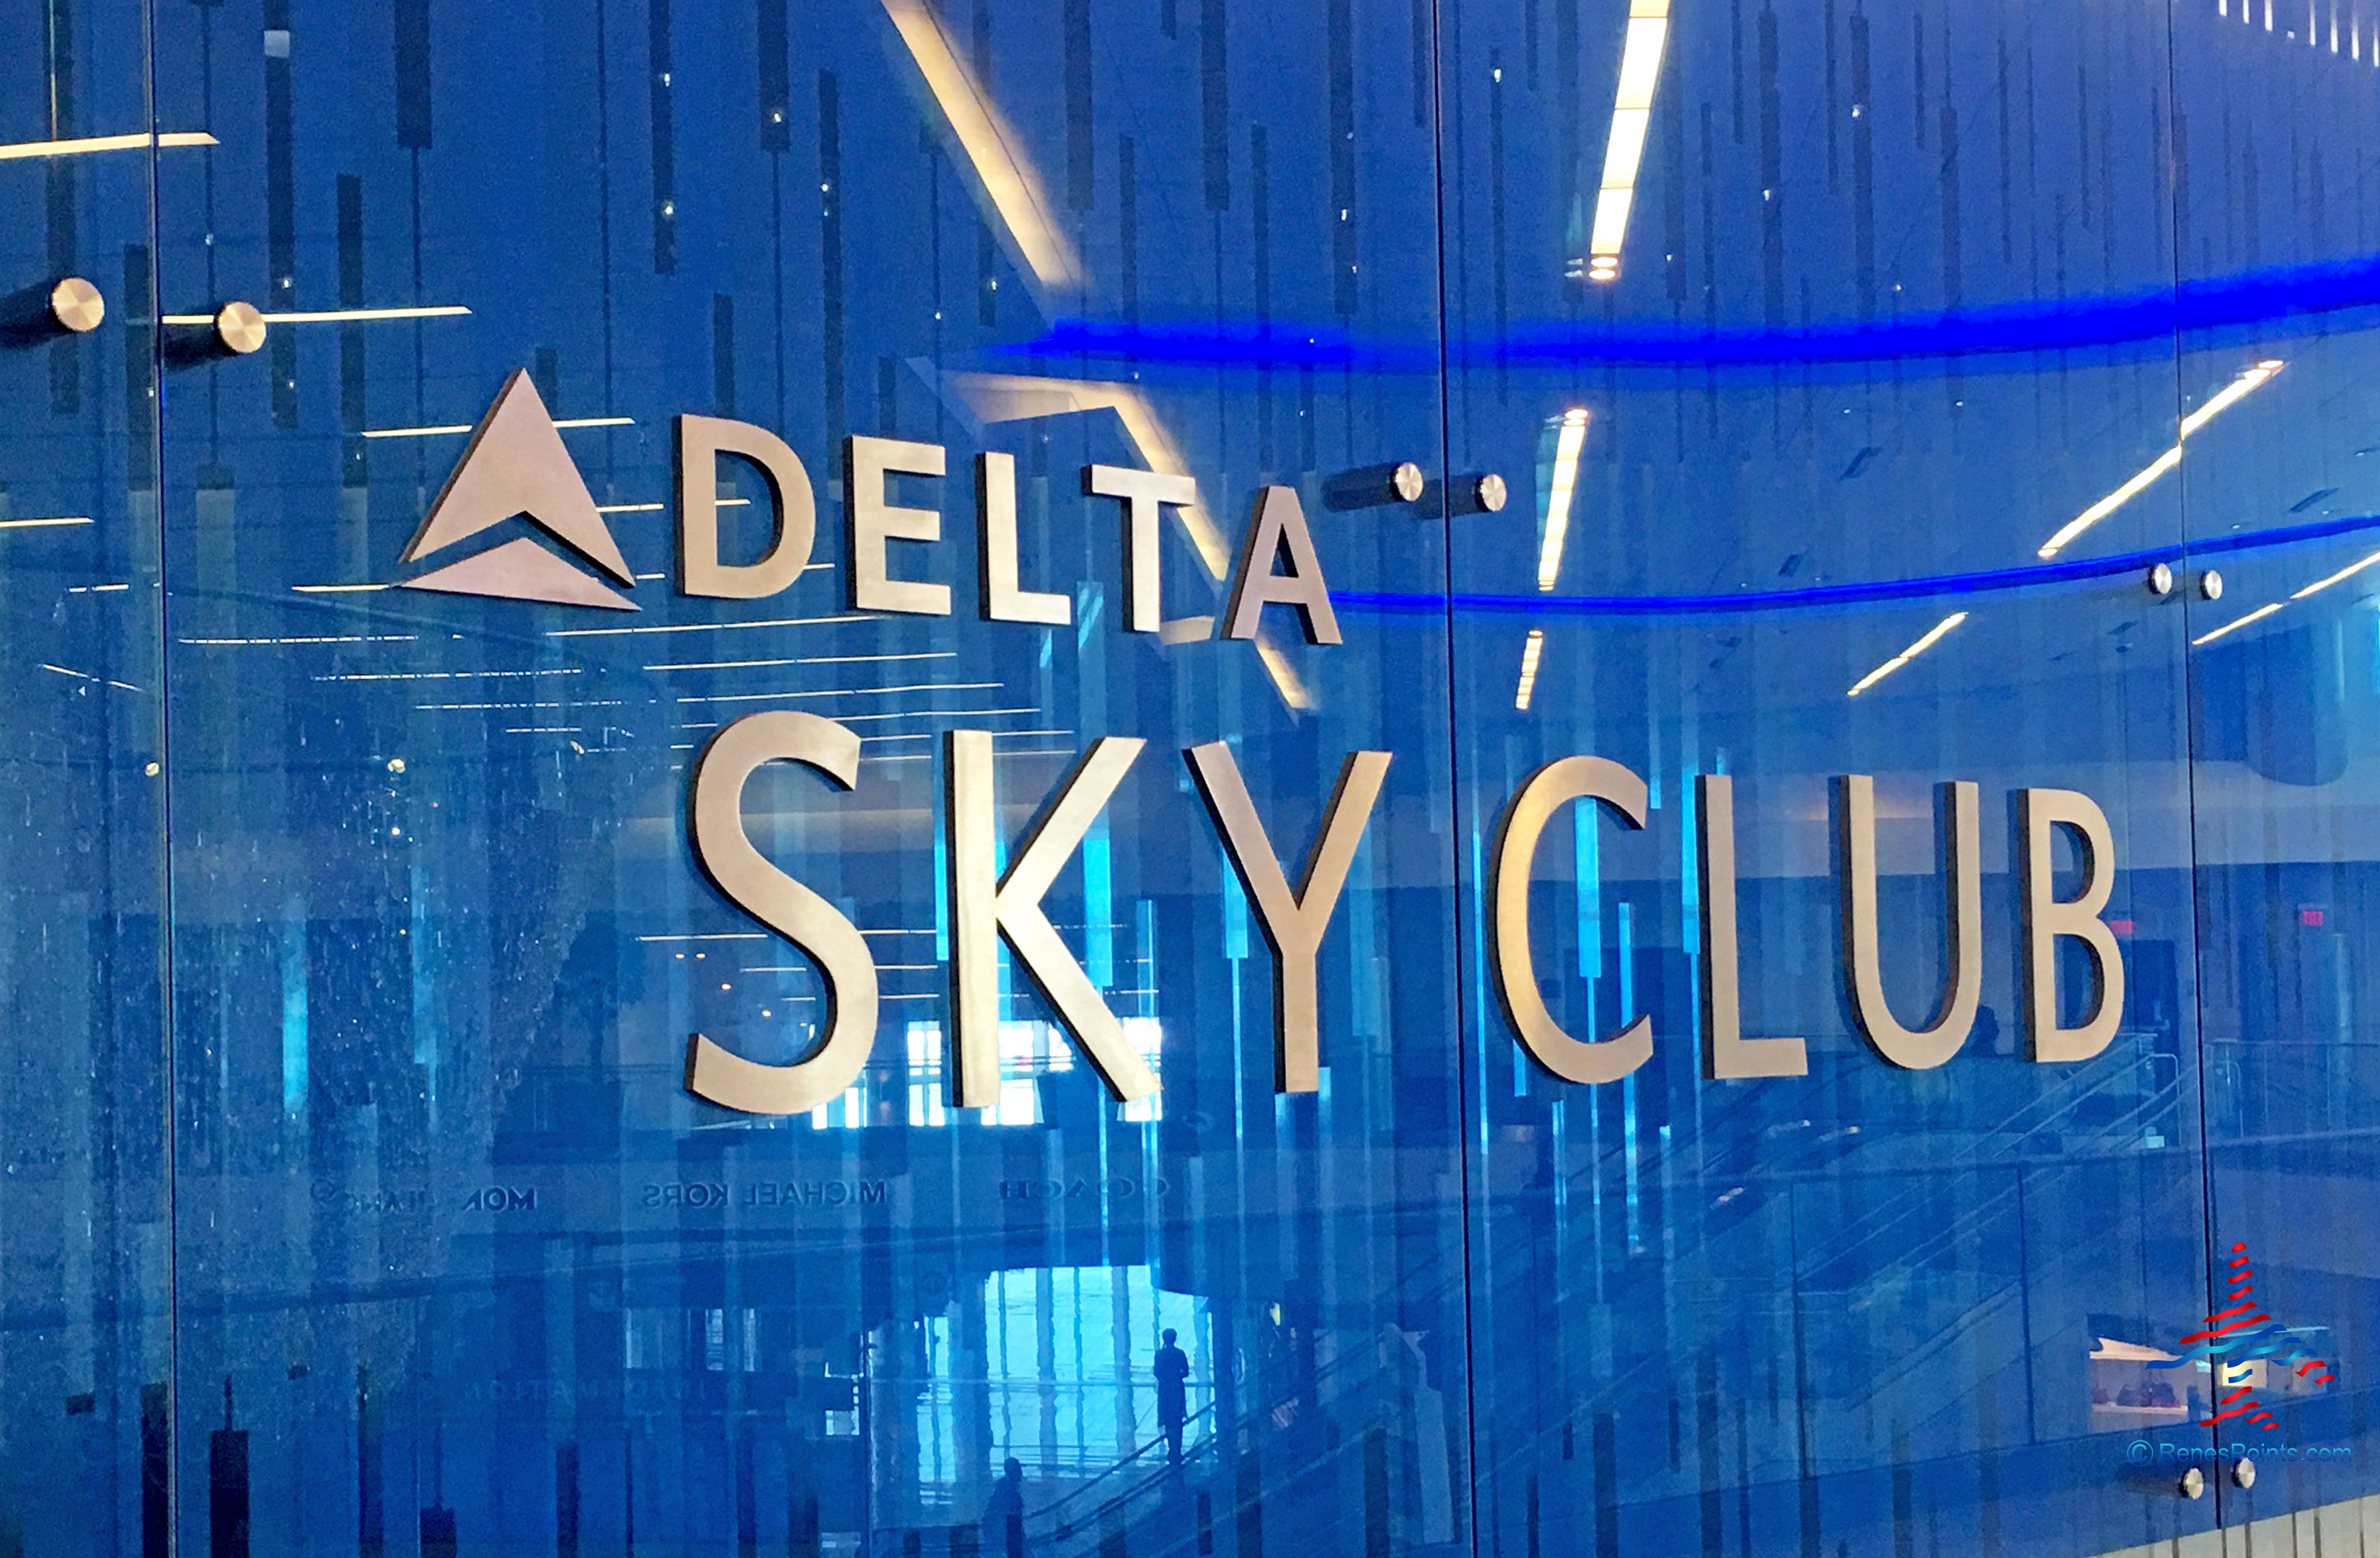 Entrance to the Delta Sky Club at Atlanta (ATL)'s international "F" terminal.